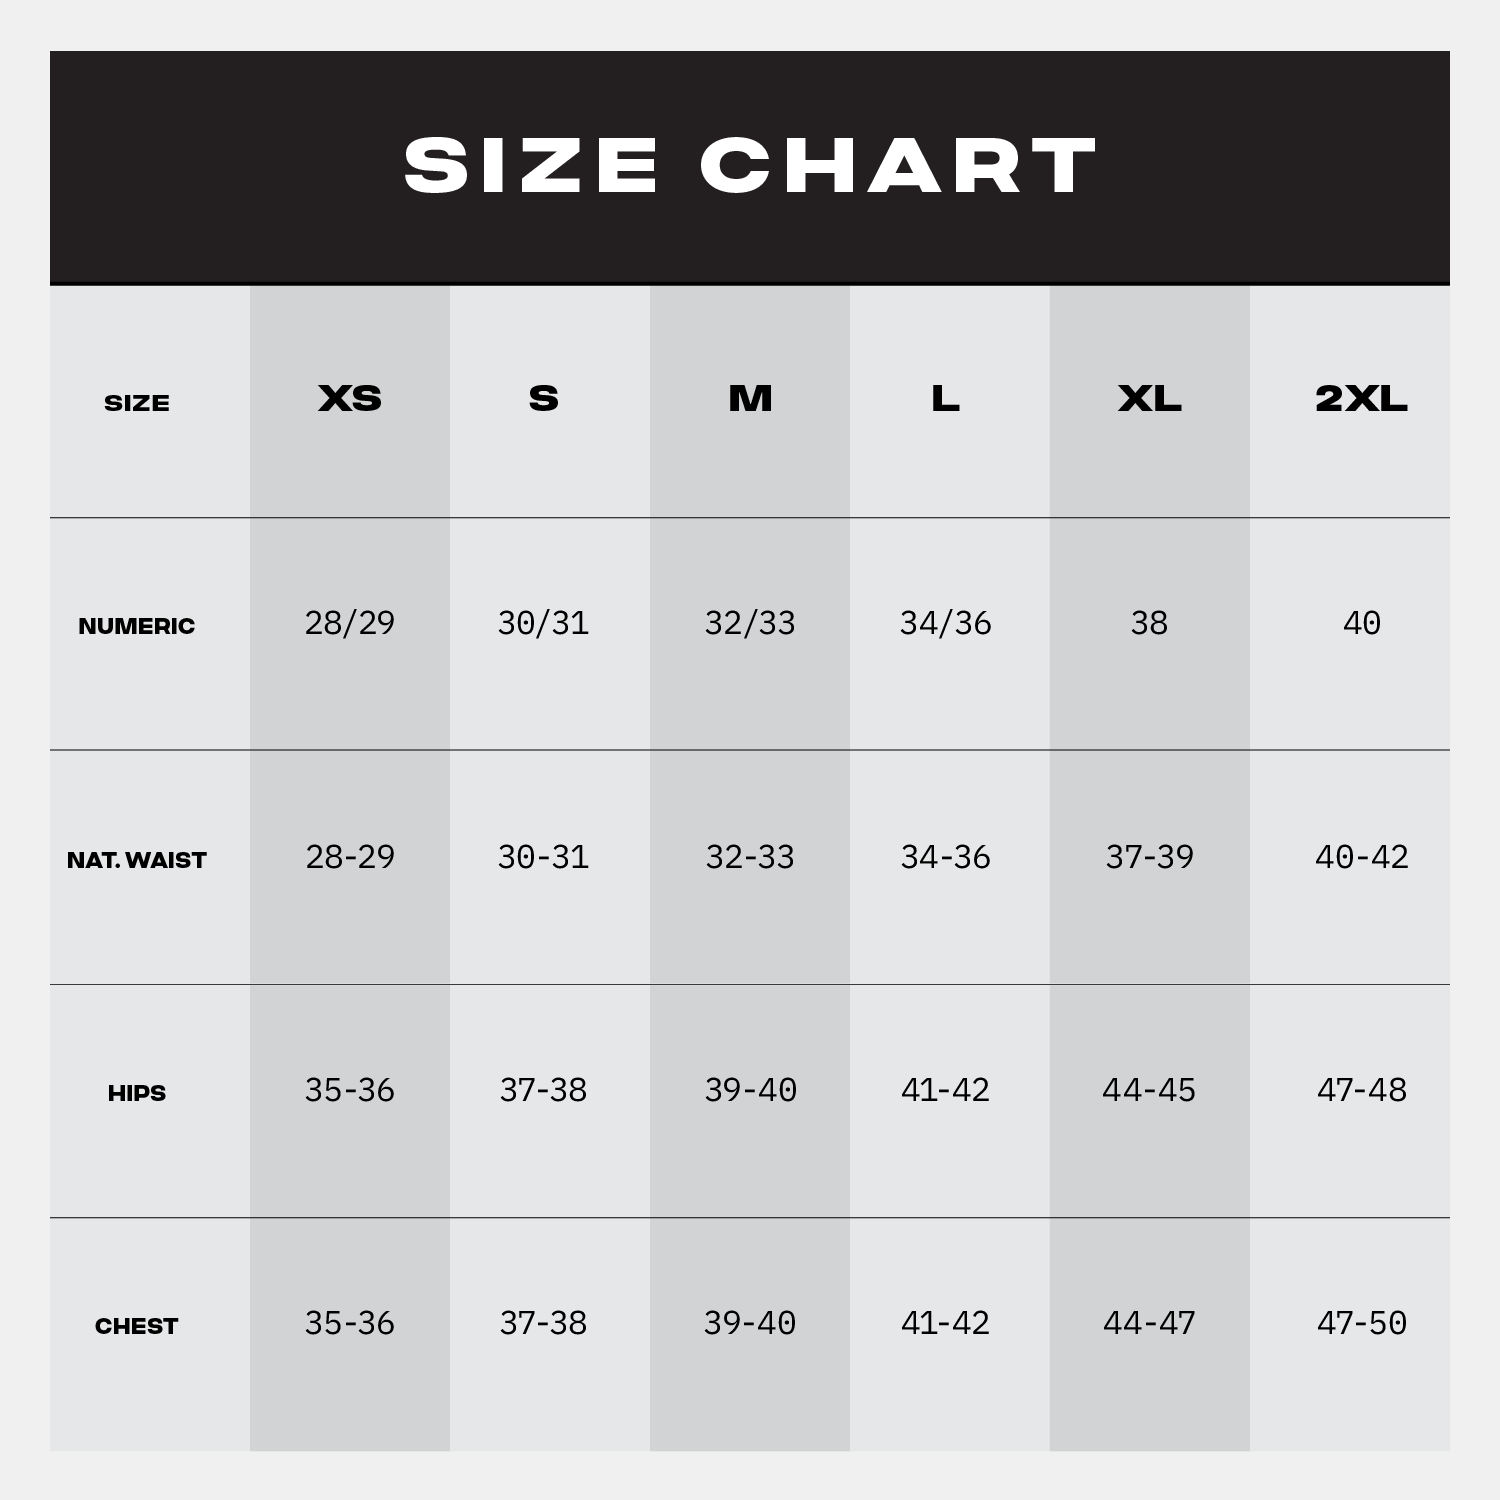 size-chart-legends.png